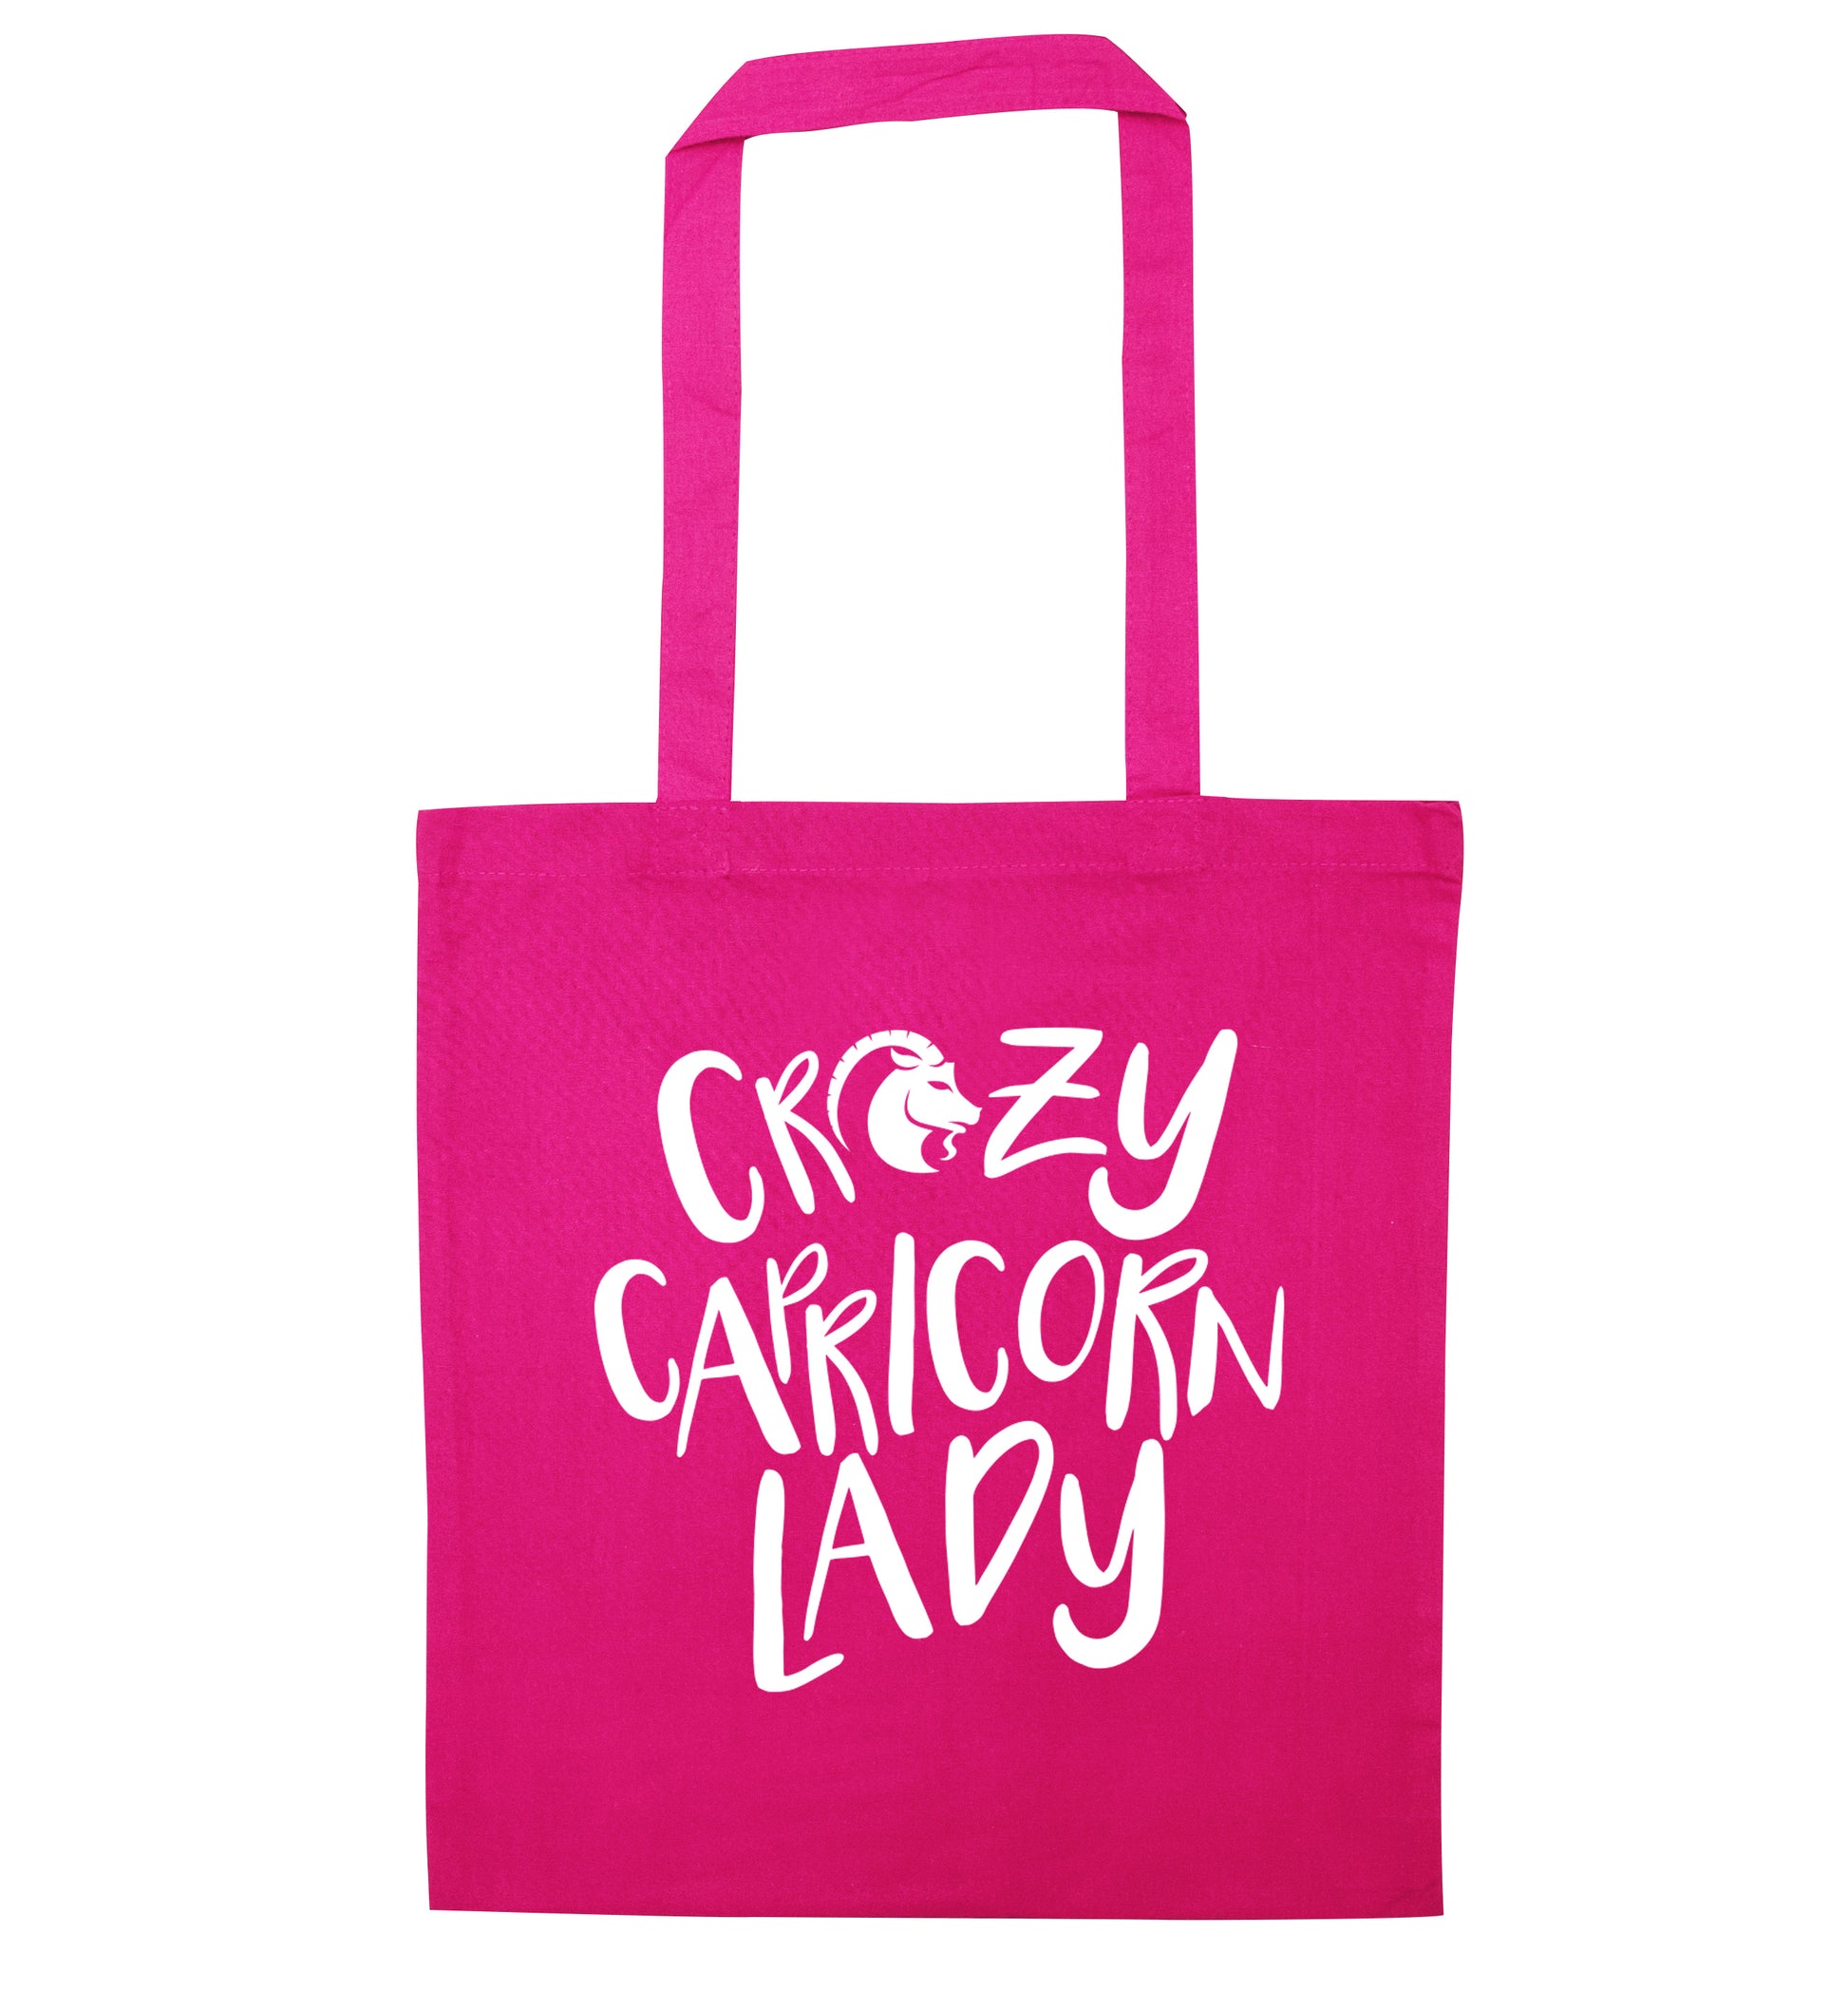 Crazy capricorn lady pink tote bag